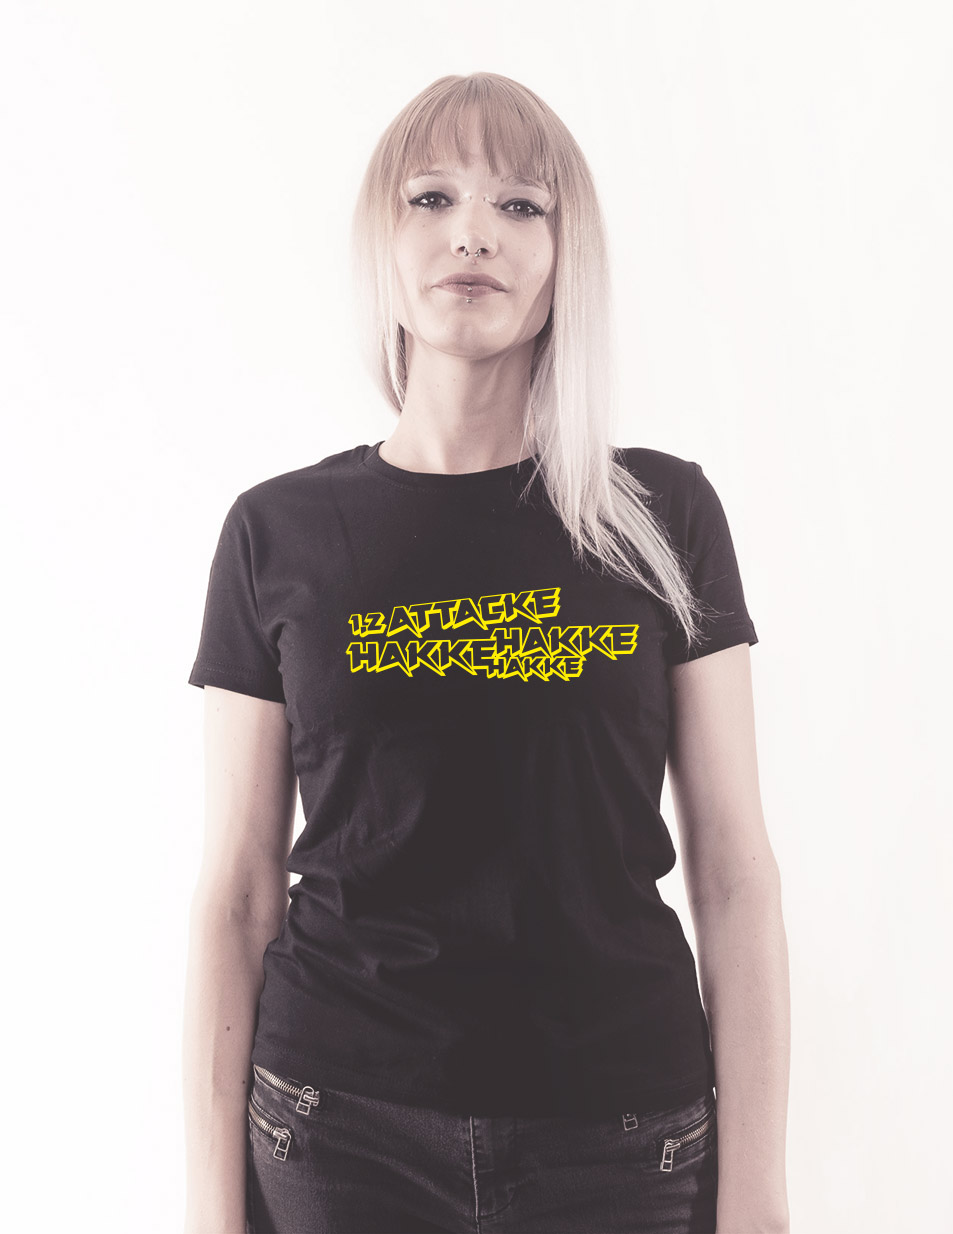 Hakke Hakke Hakke Girly T-Shirt mehrfarbig auf schwarz